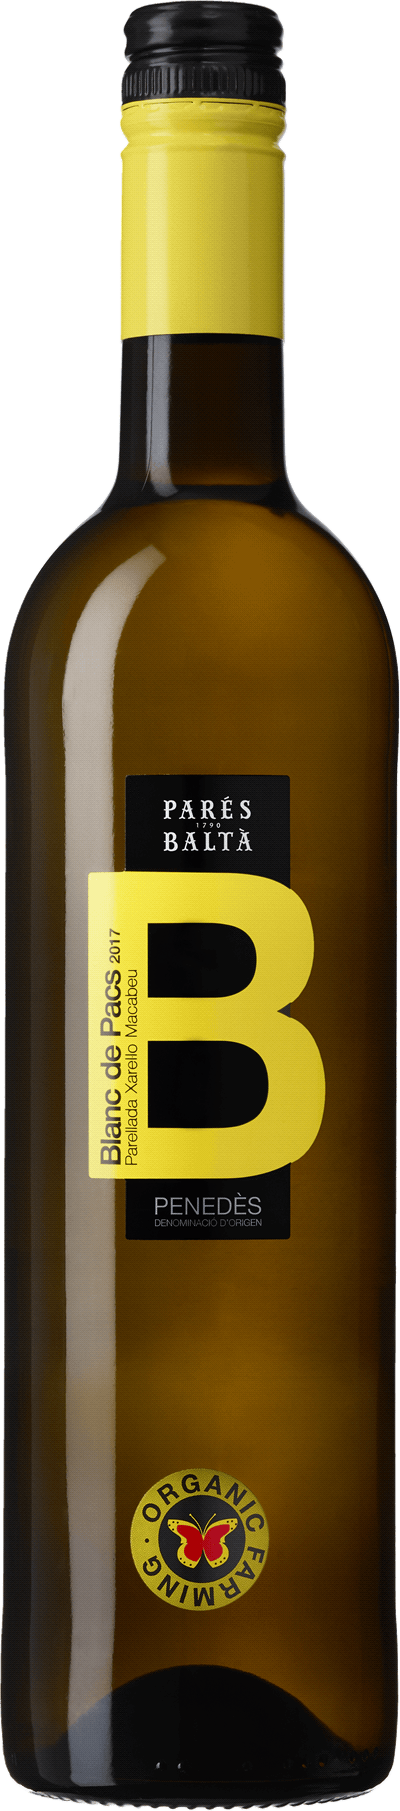 Produktbild för Parés Baltà